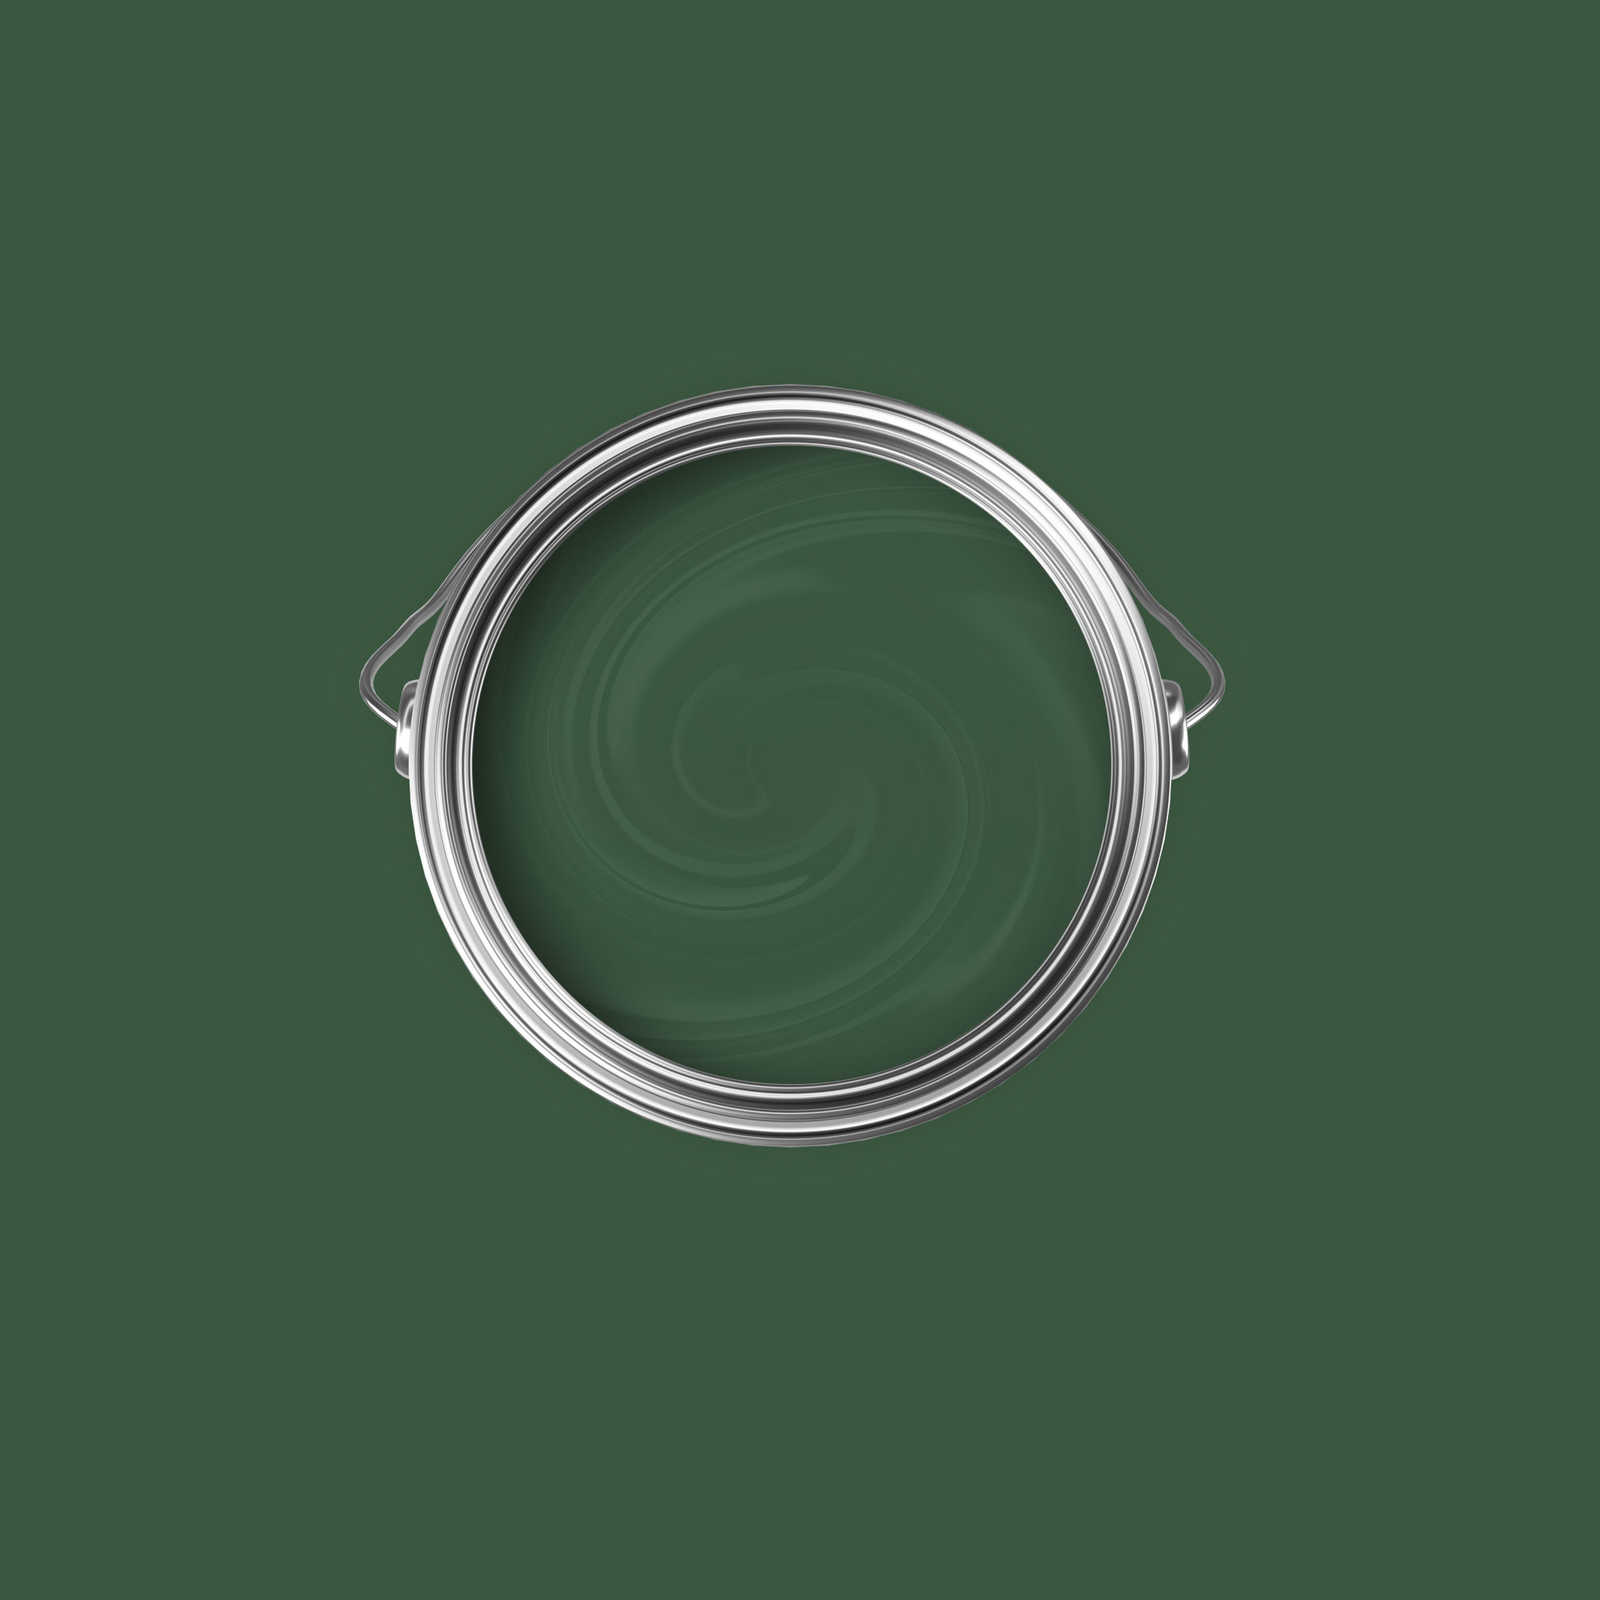             Premium Muurverf Levendig Mosgroen »Gorgeous Green« NW505 – 2,5 Liter
        